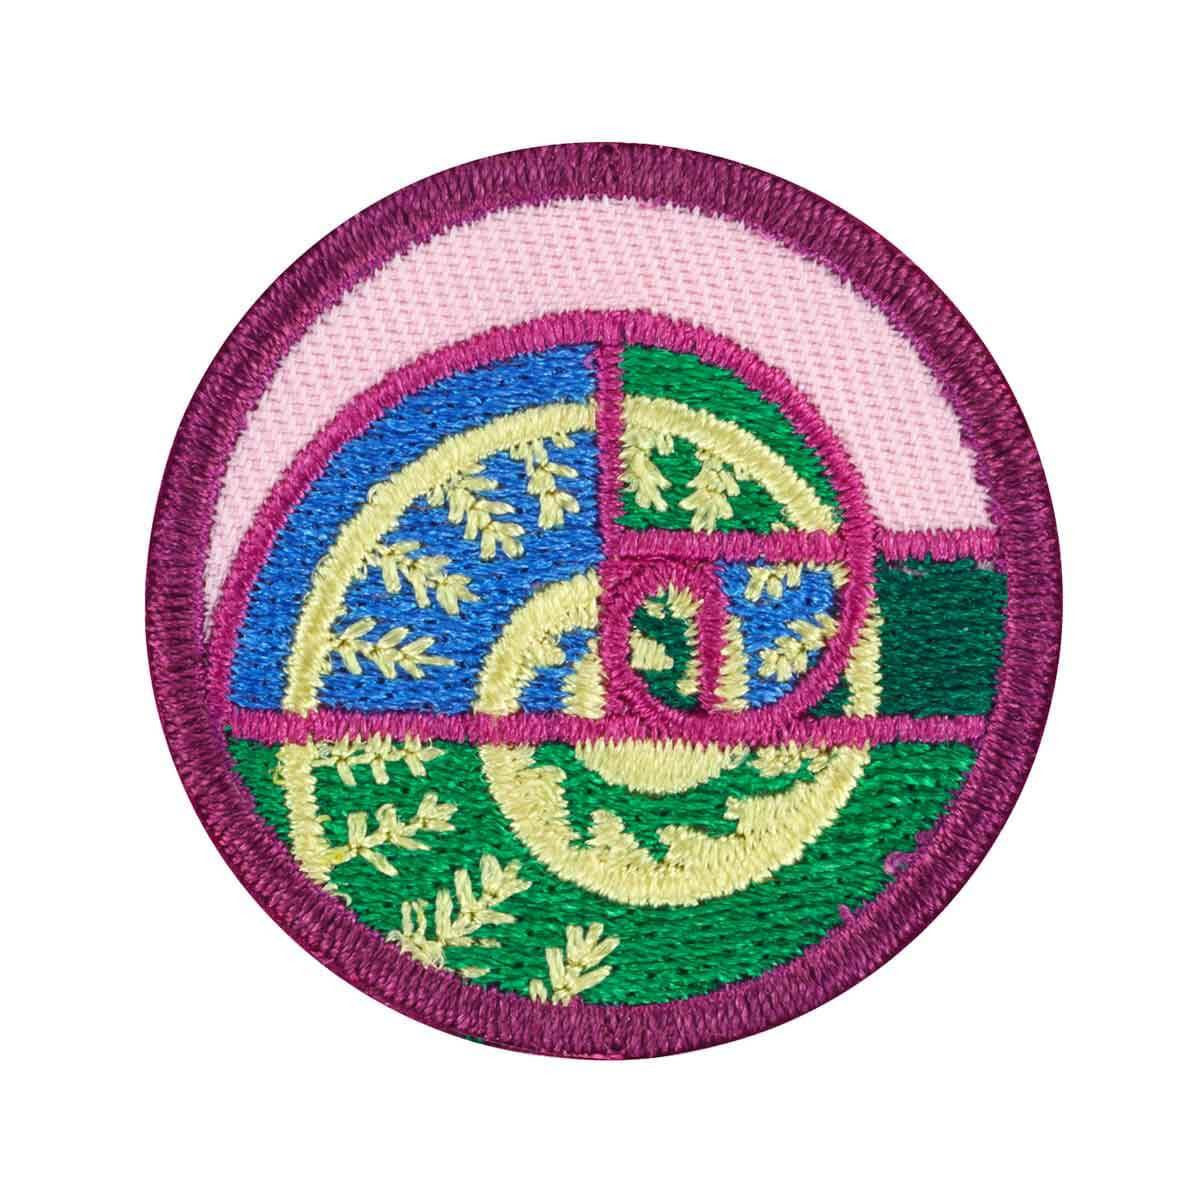 Junior Shapes in Nature Badge